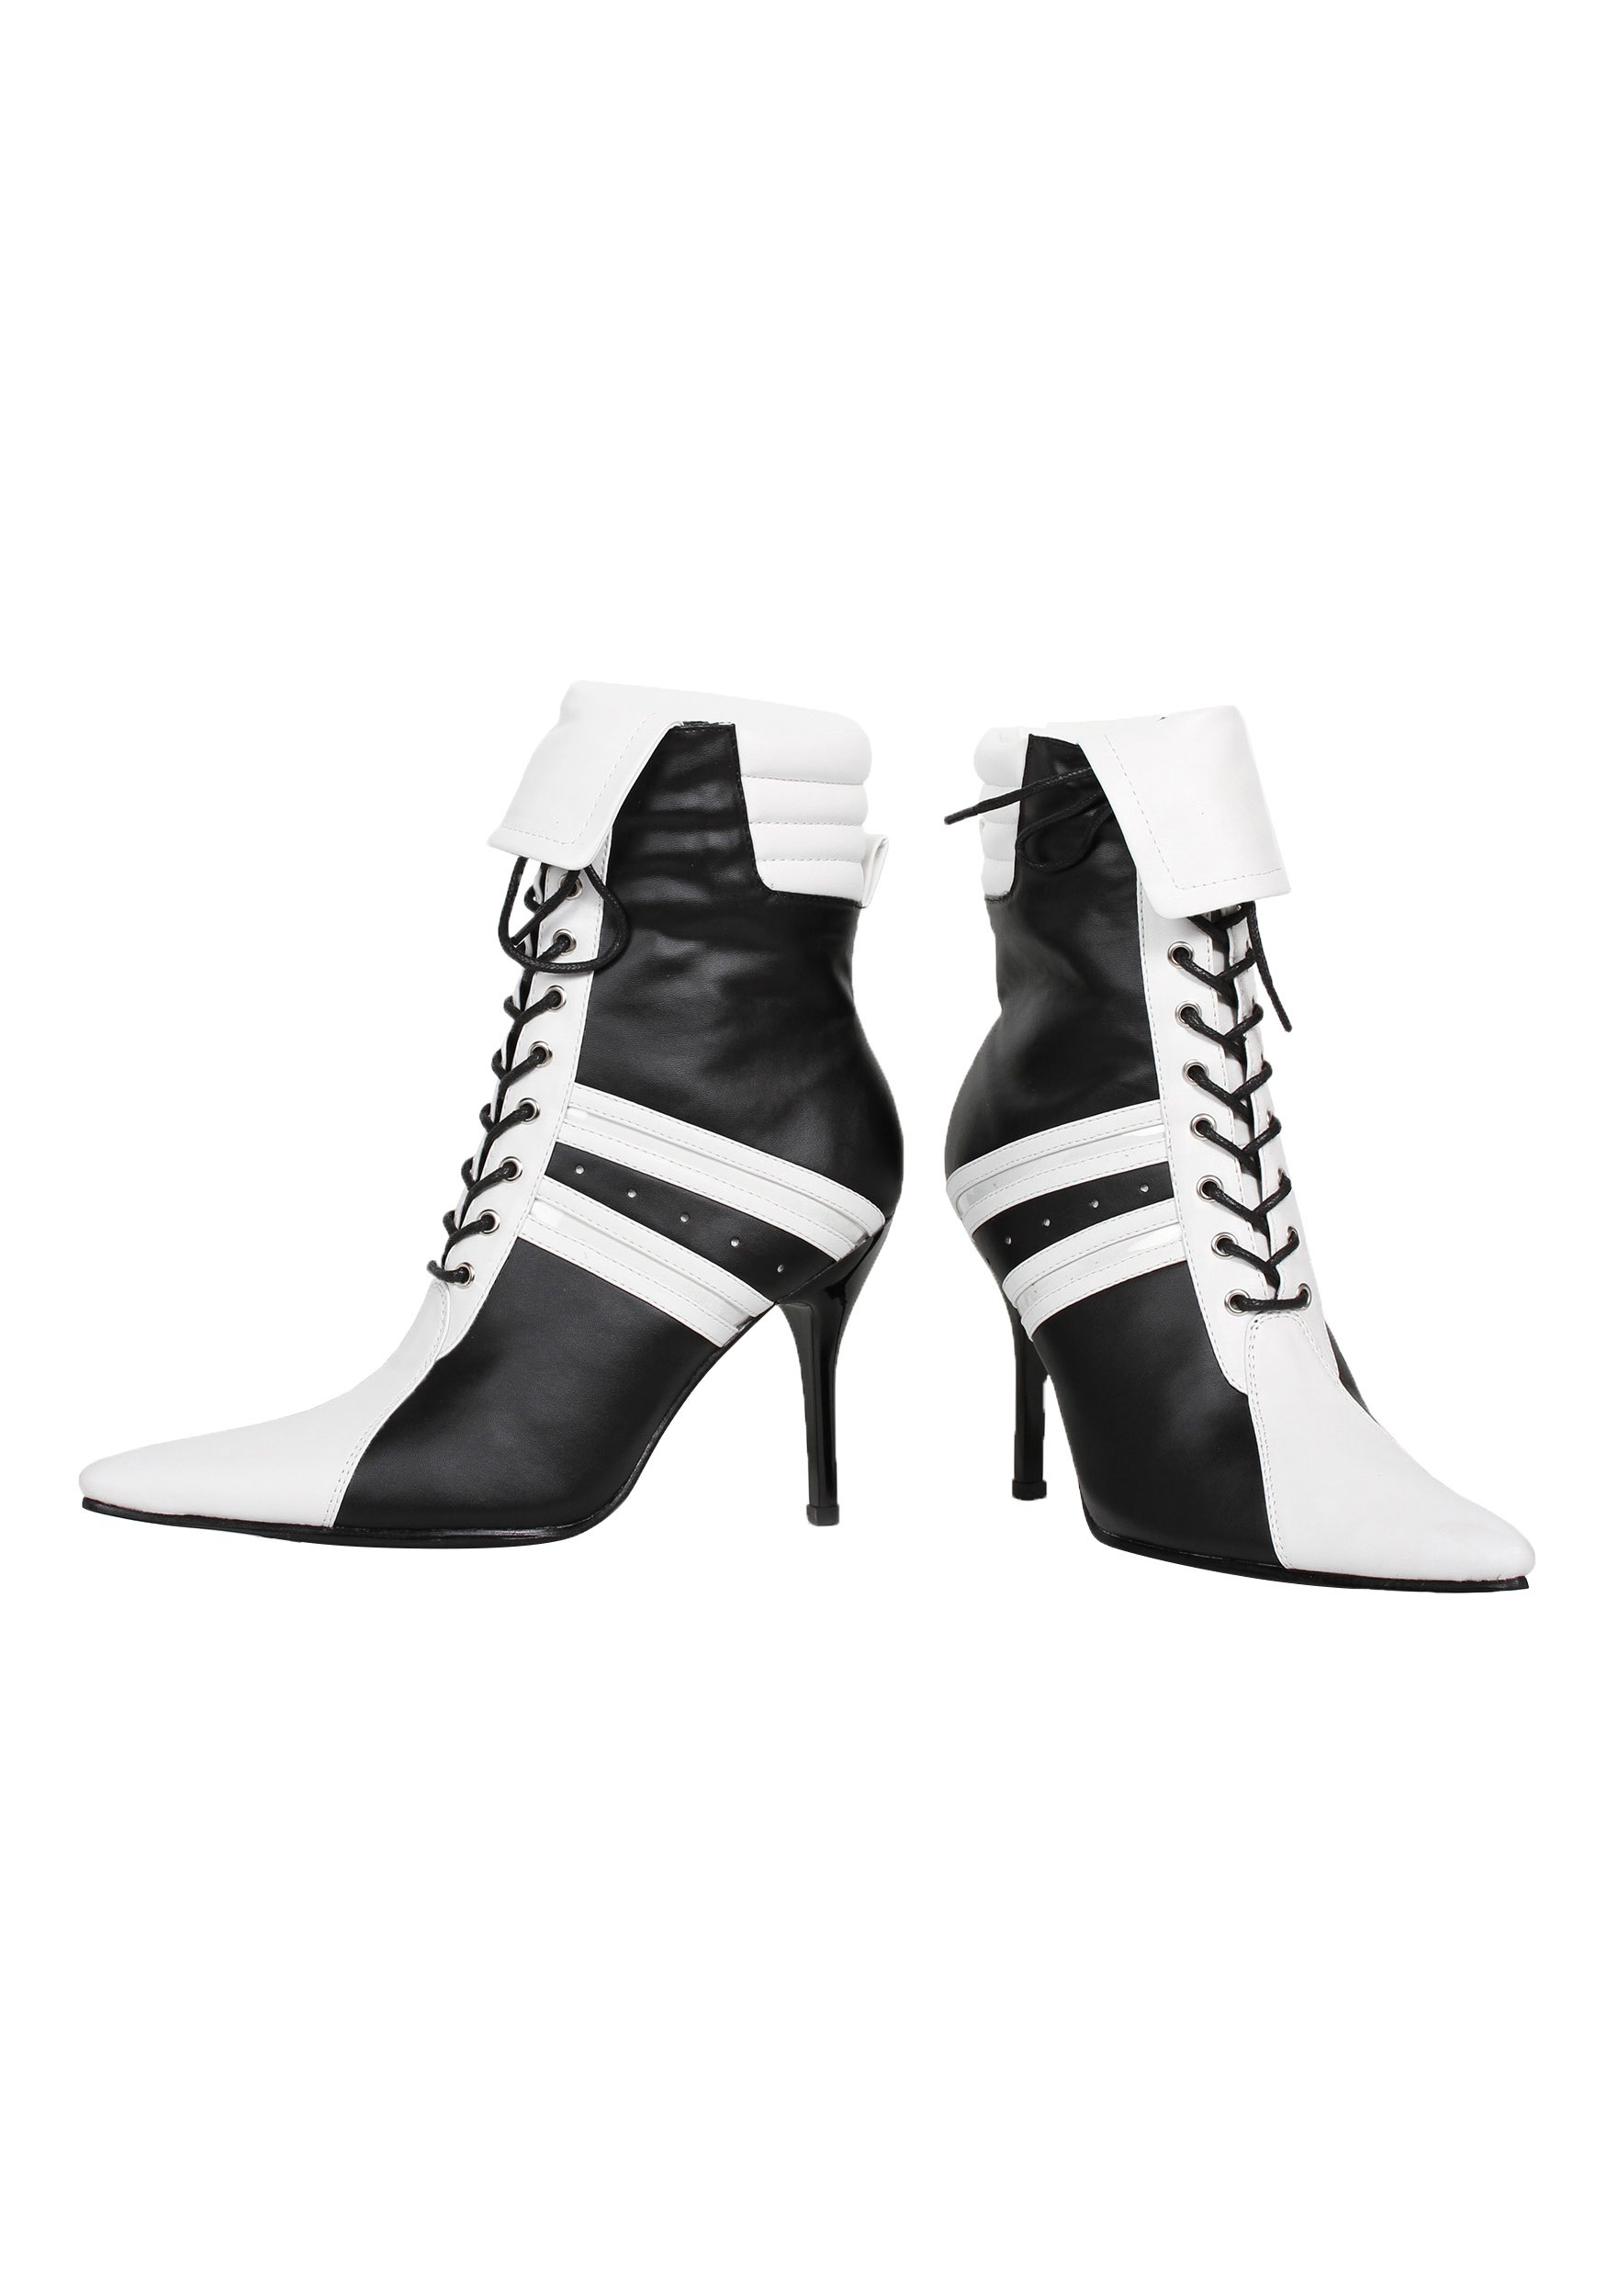 Women’s Referee Shoes